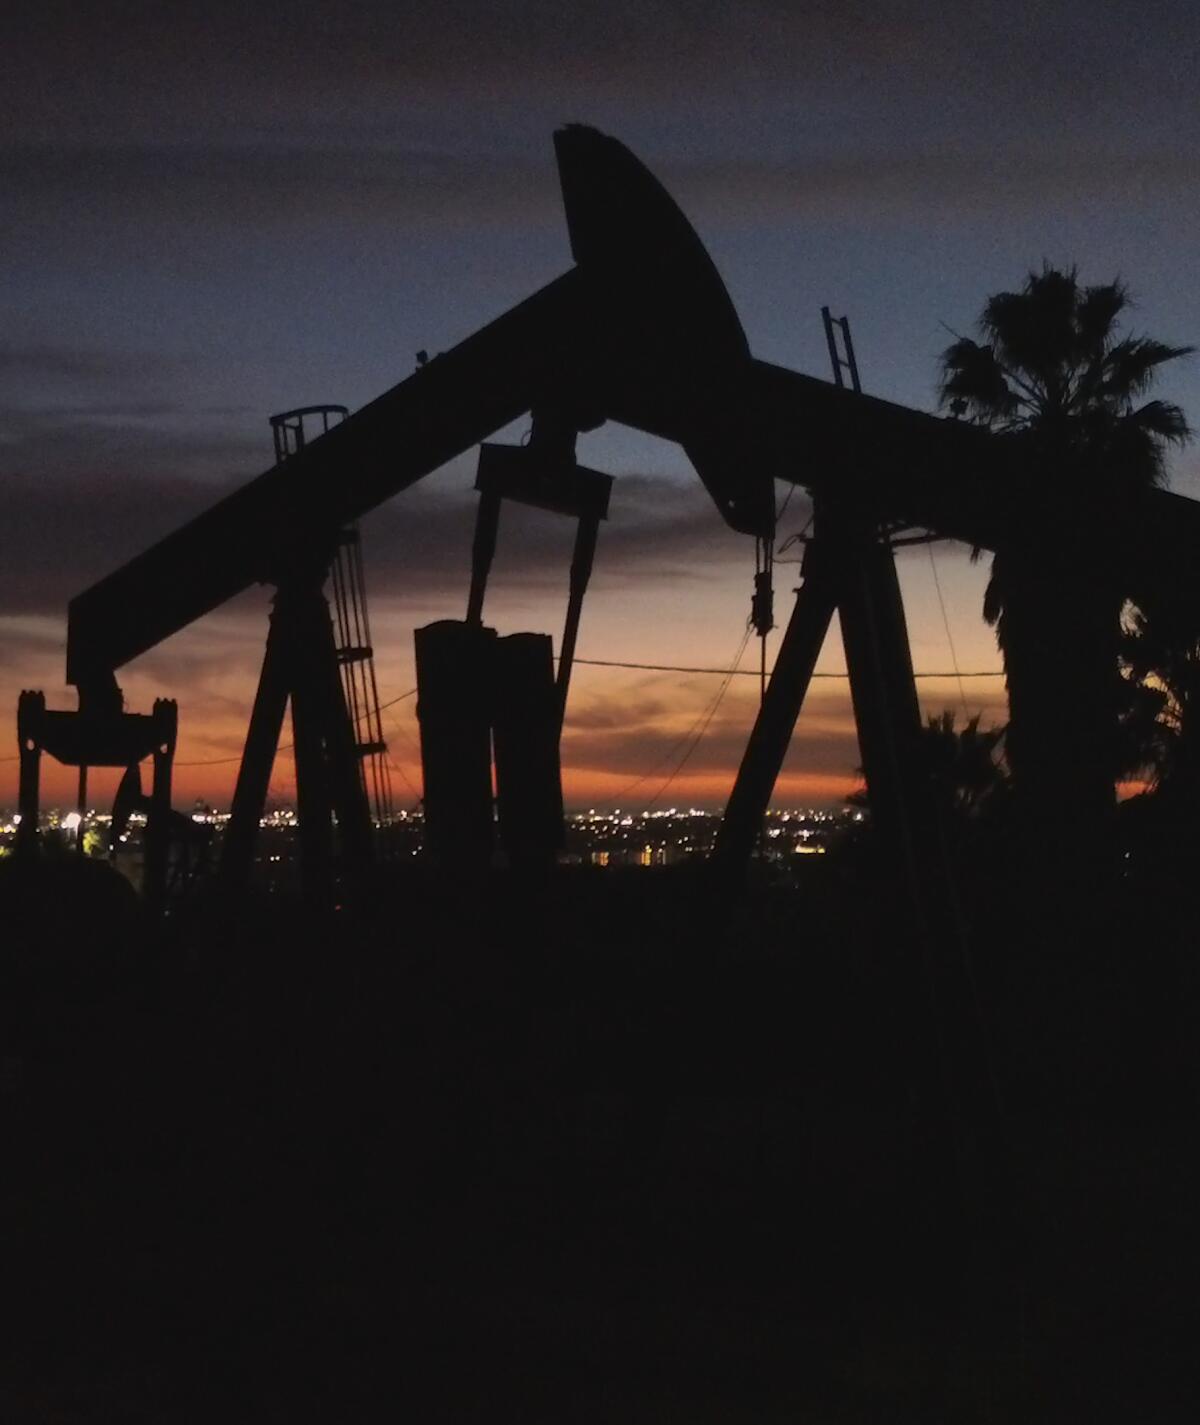 Oil derricks pump against a red sunset.